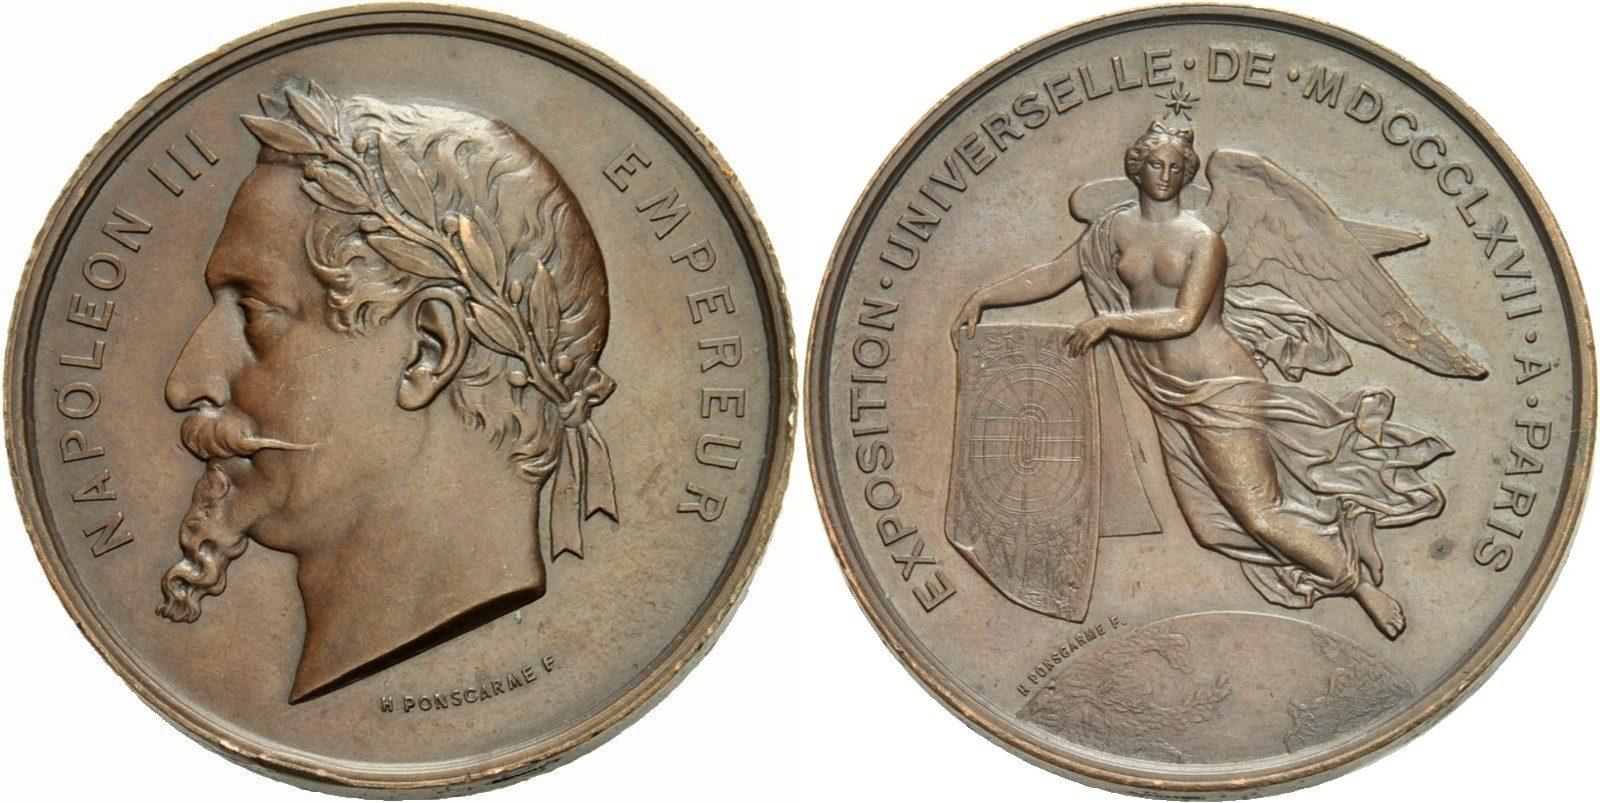 Foto Frankreich Medaille 1867 foto 655923